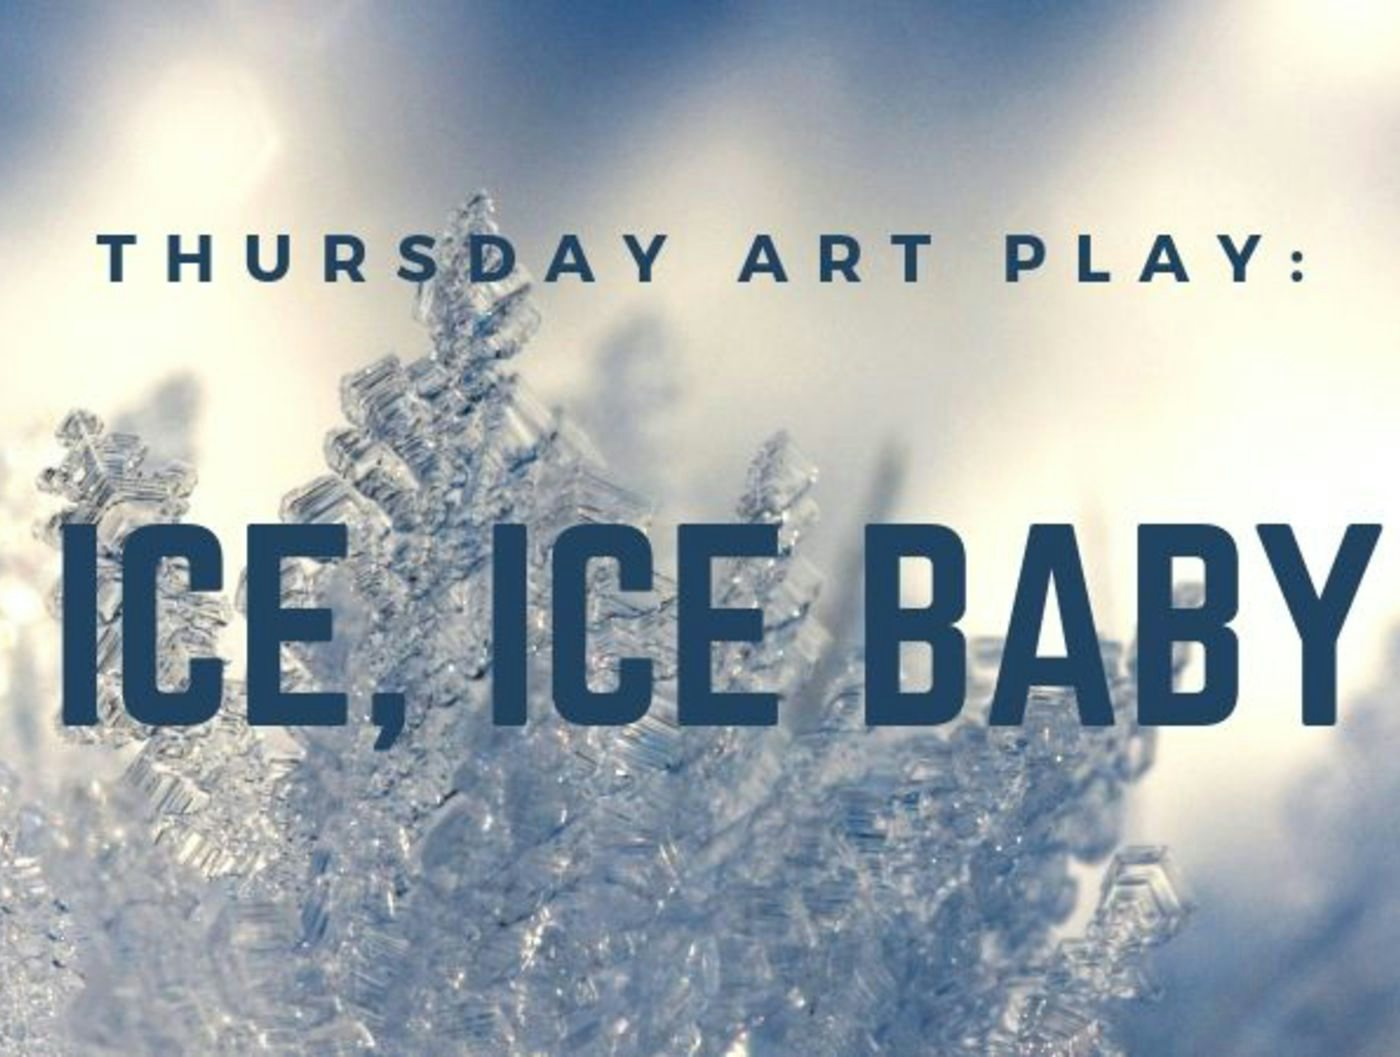 Thursday Art Play: Ice, Ice Baby